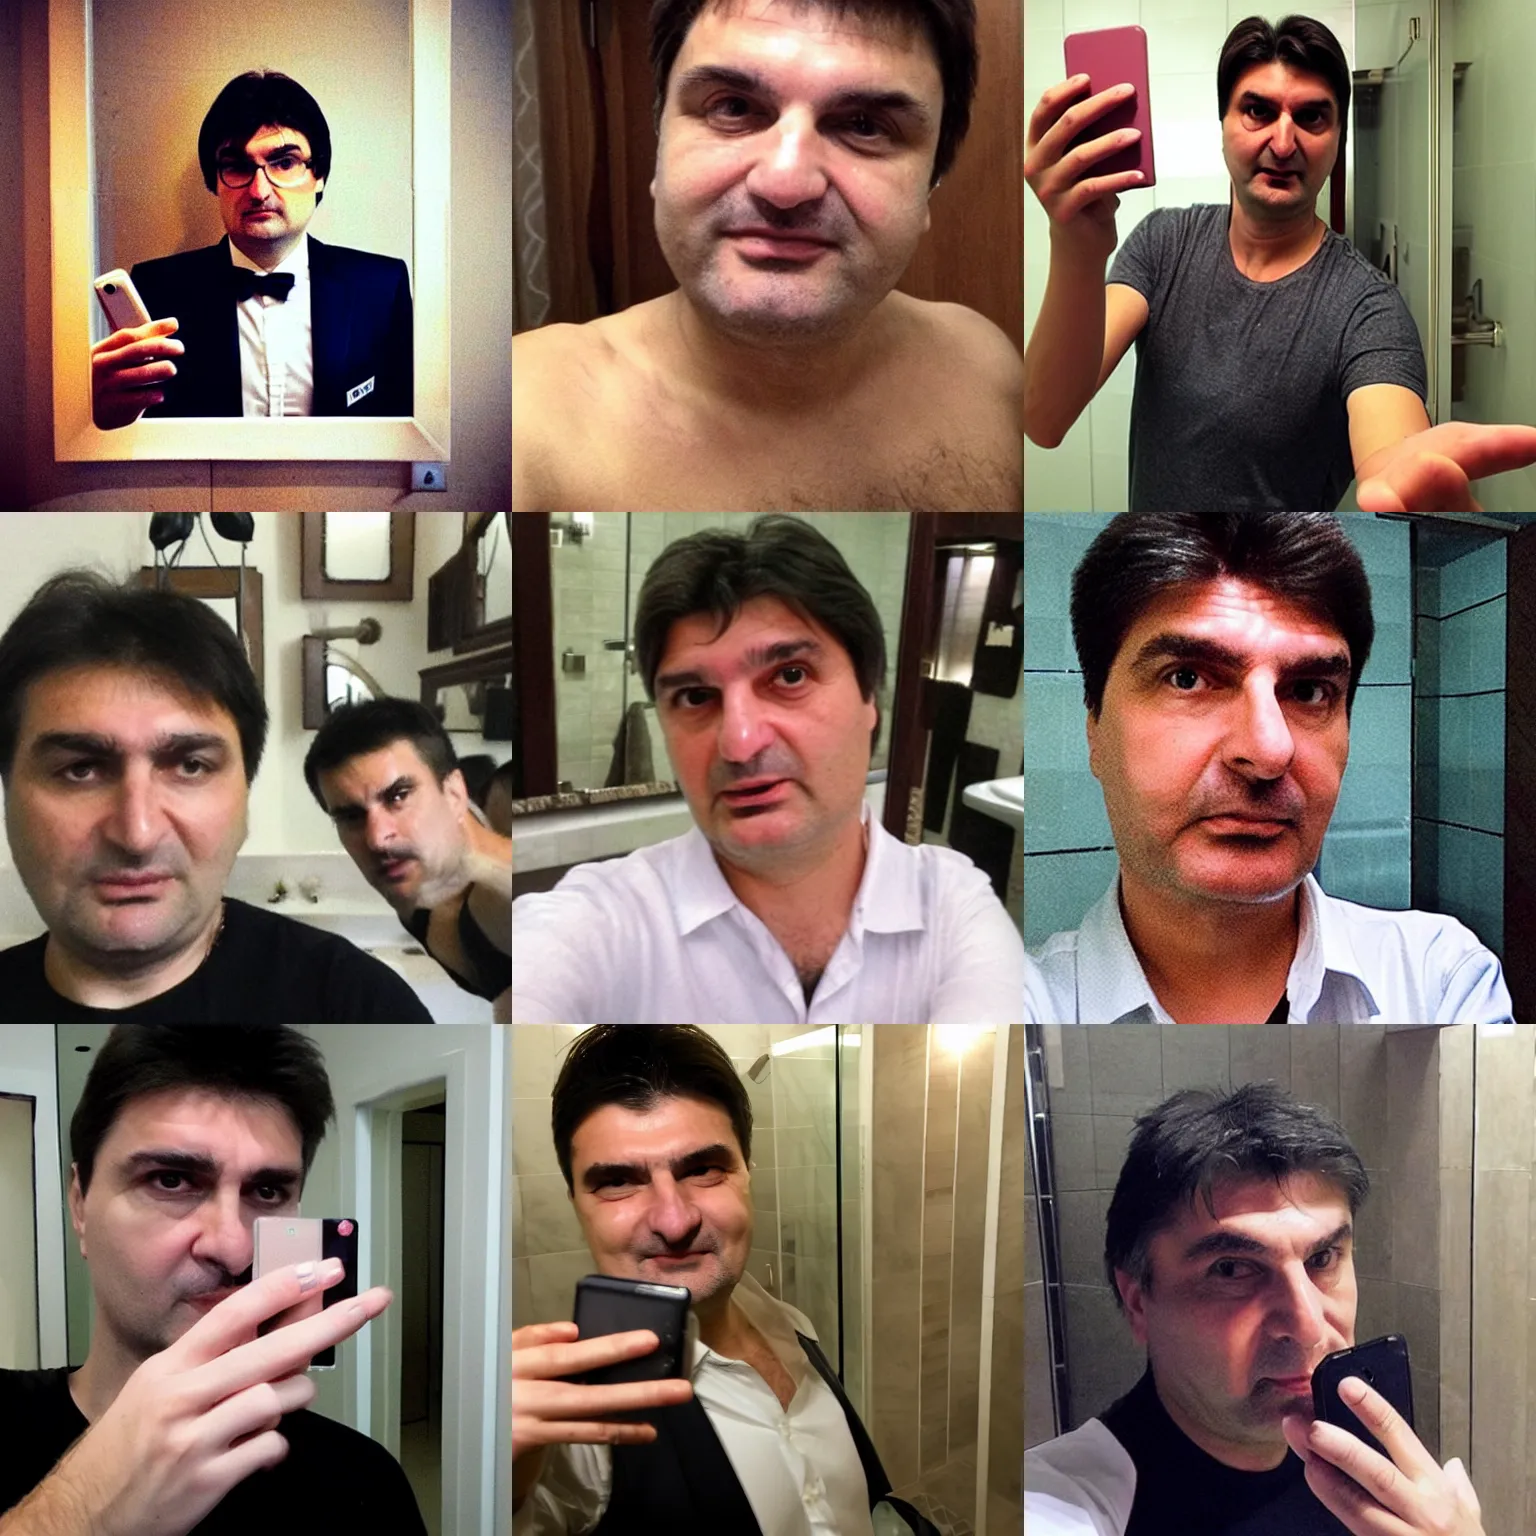 Prompt: zoran milanovic taking selfie in a bathroom with duckface